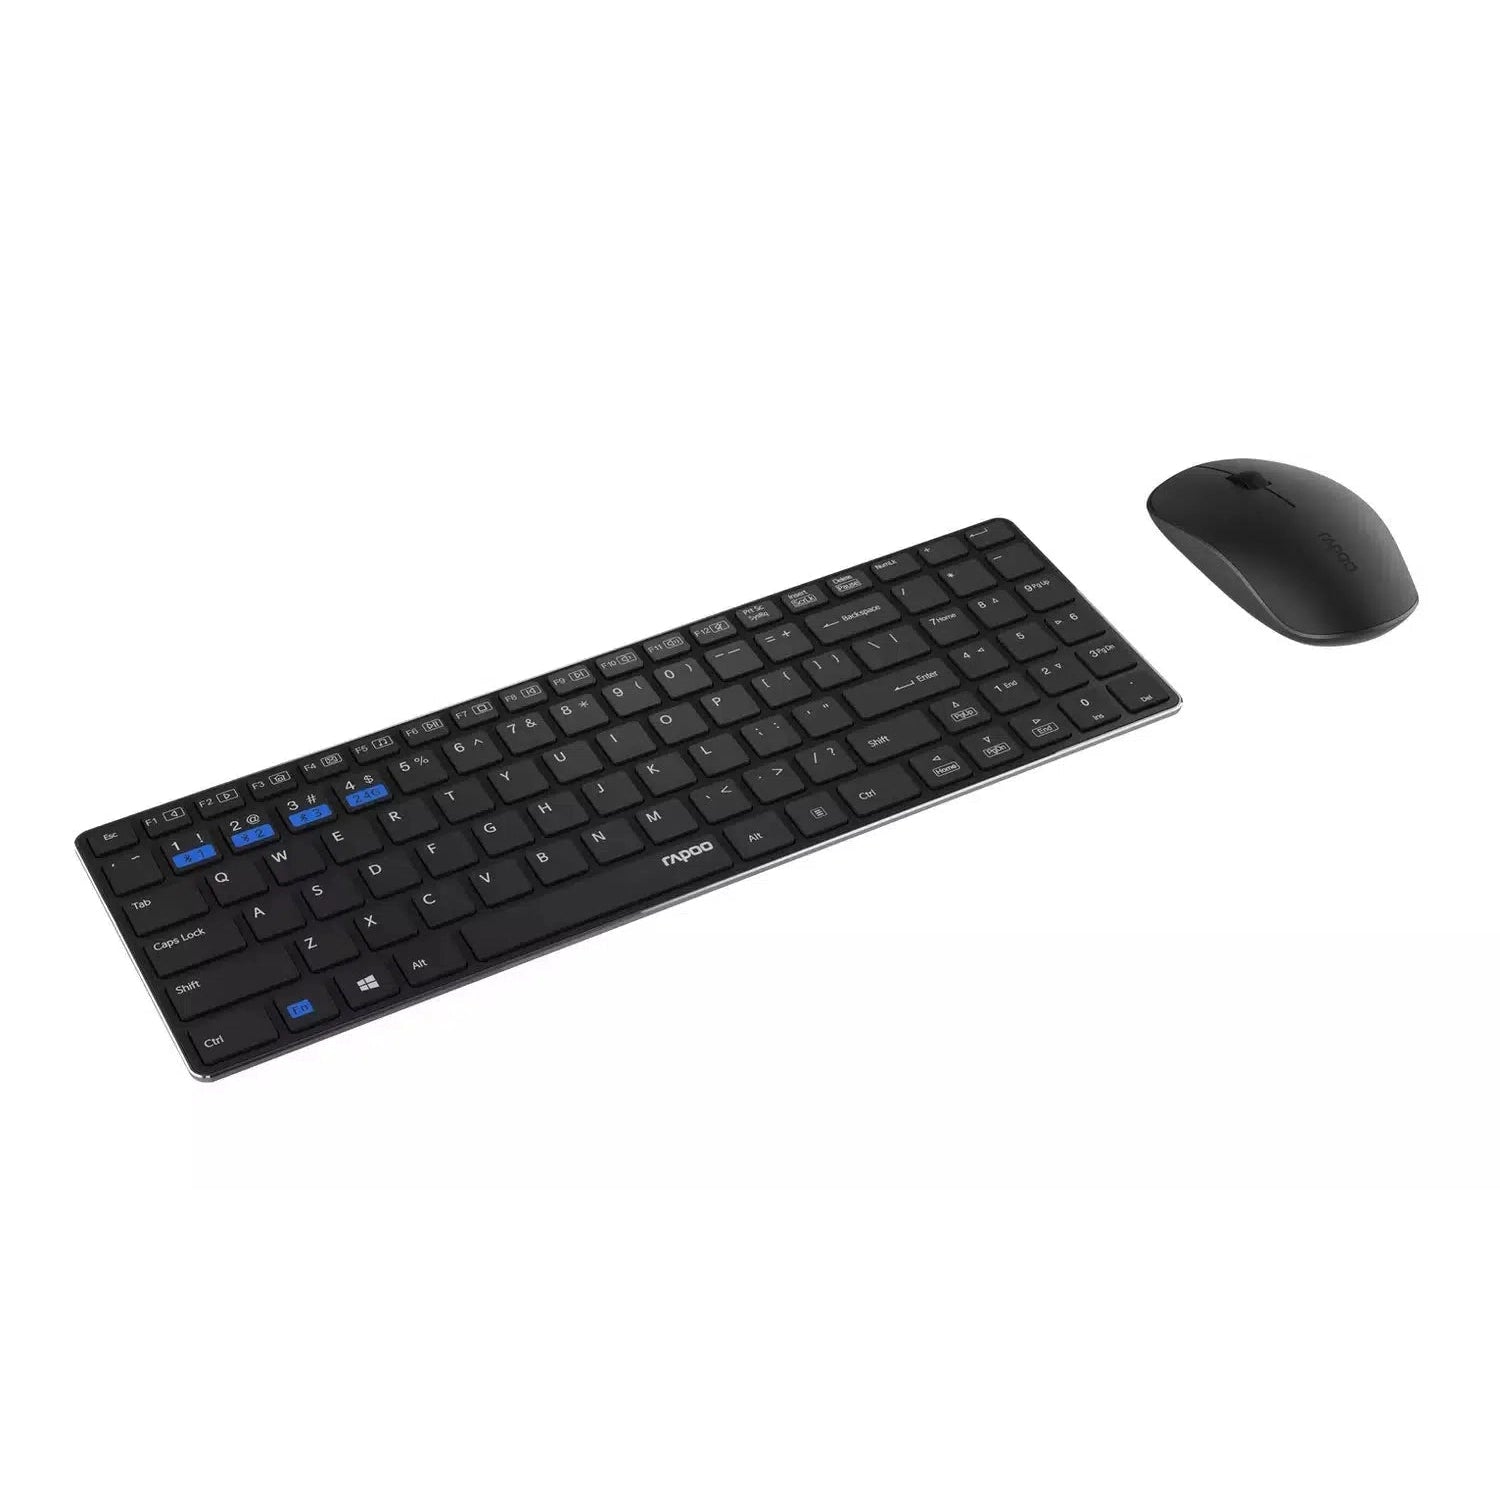 Rapoo 9300M Wireless Keyboard & Mouse Set, Black - Refurbished Excellent